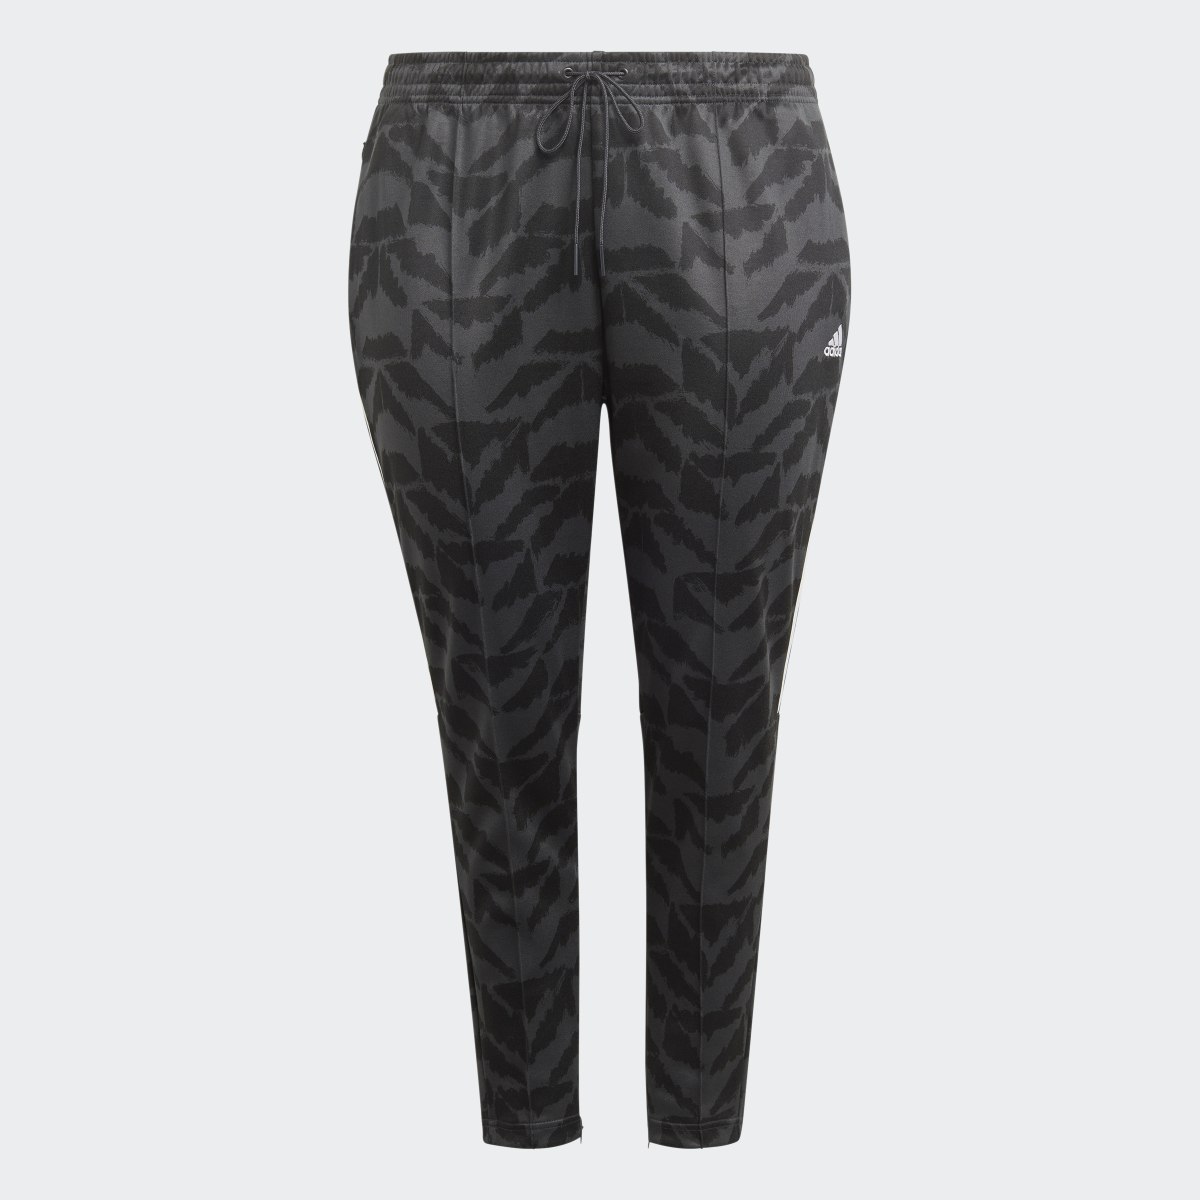 Adidas Pantalón Tiro Suit Up Lifestyle (Tallas grandes). 4